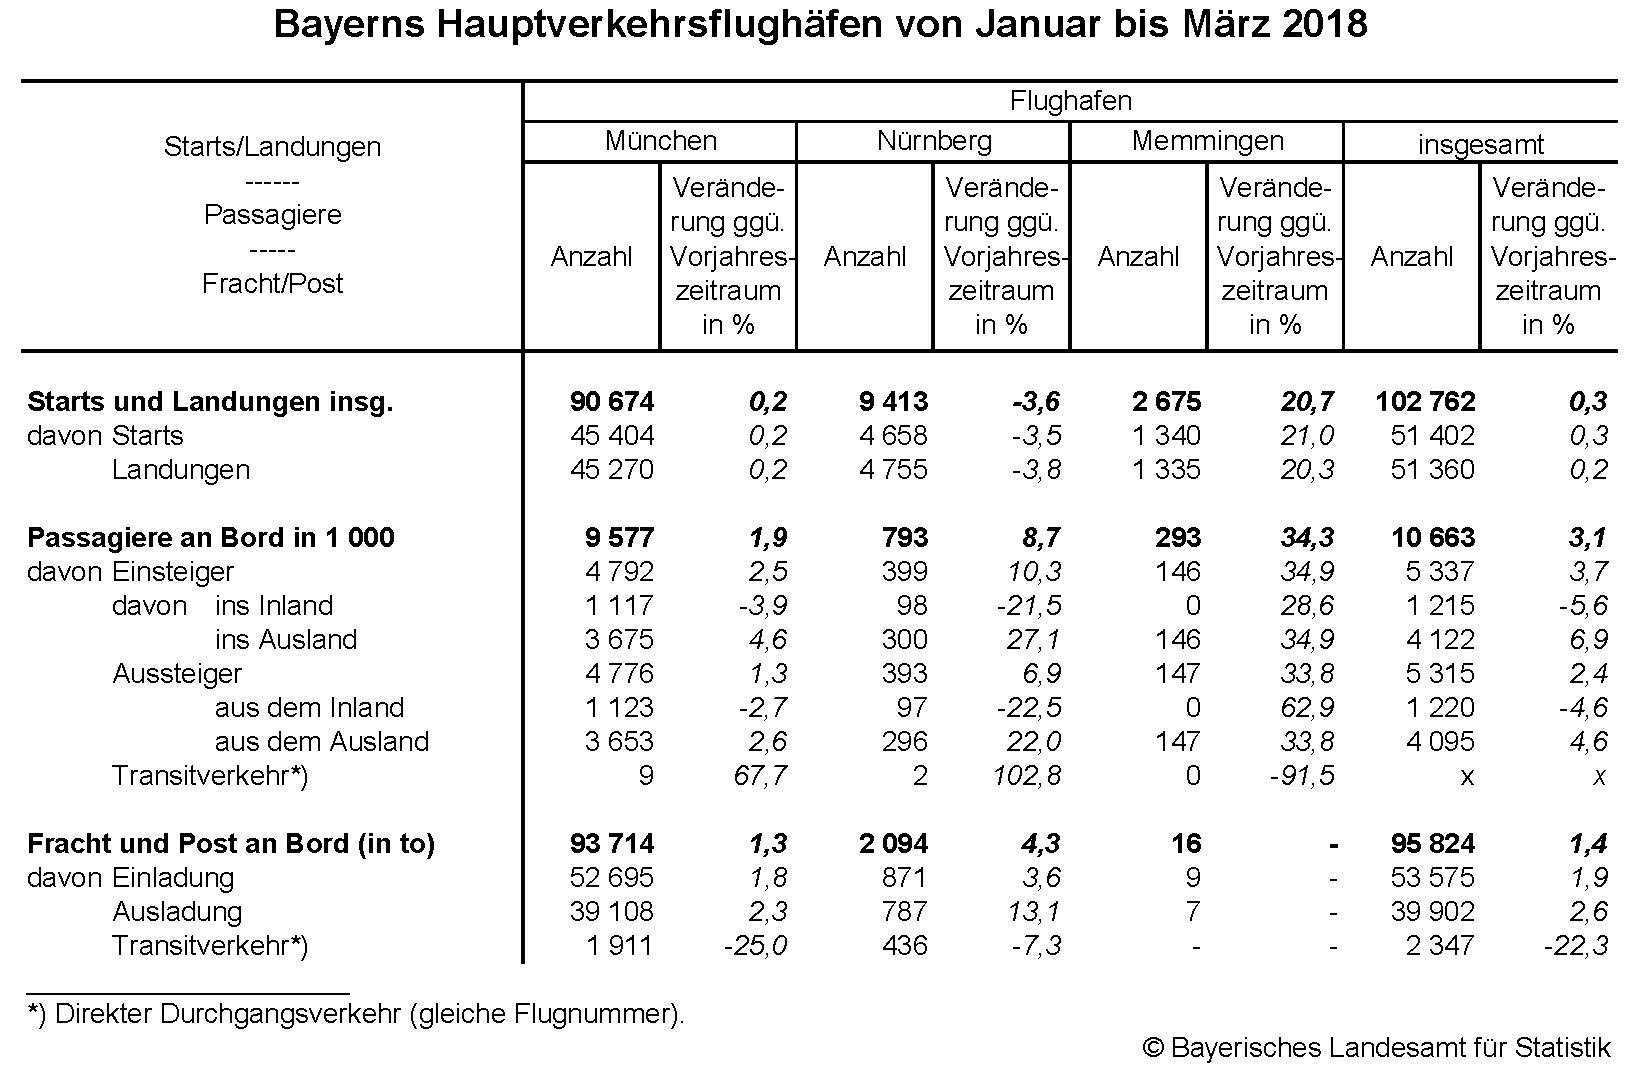 Bayerns Hauptverkehrsflughäfen von Januar bis März 2018